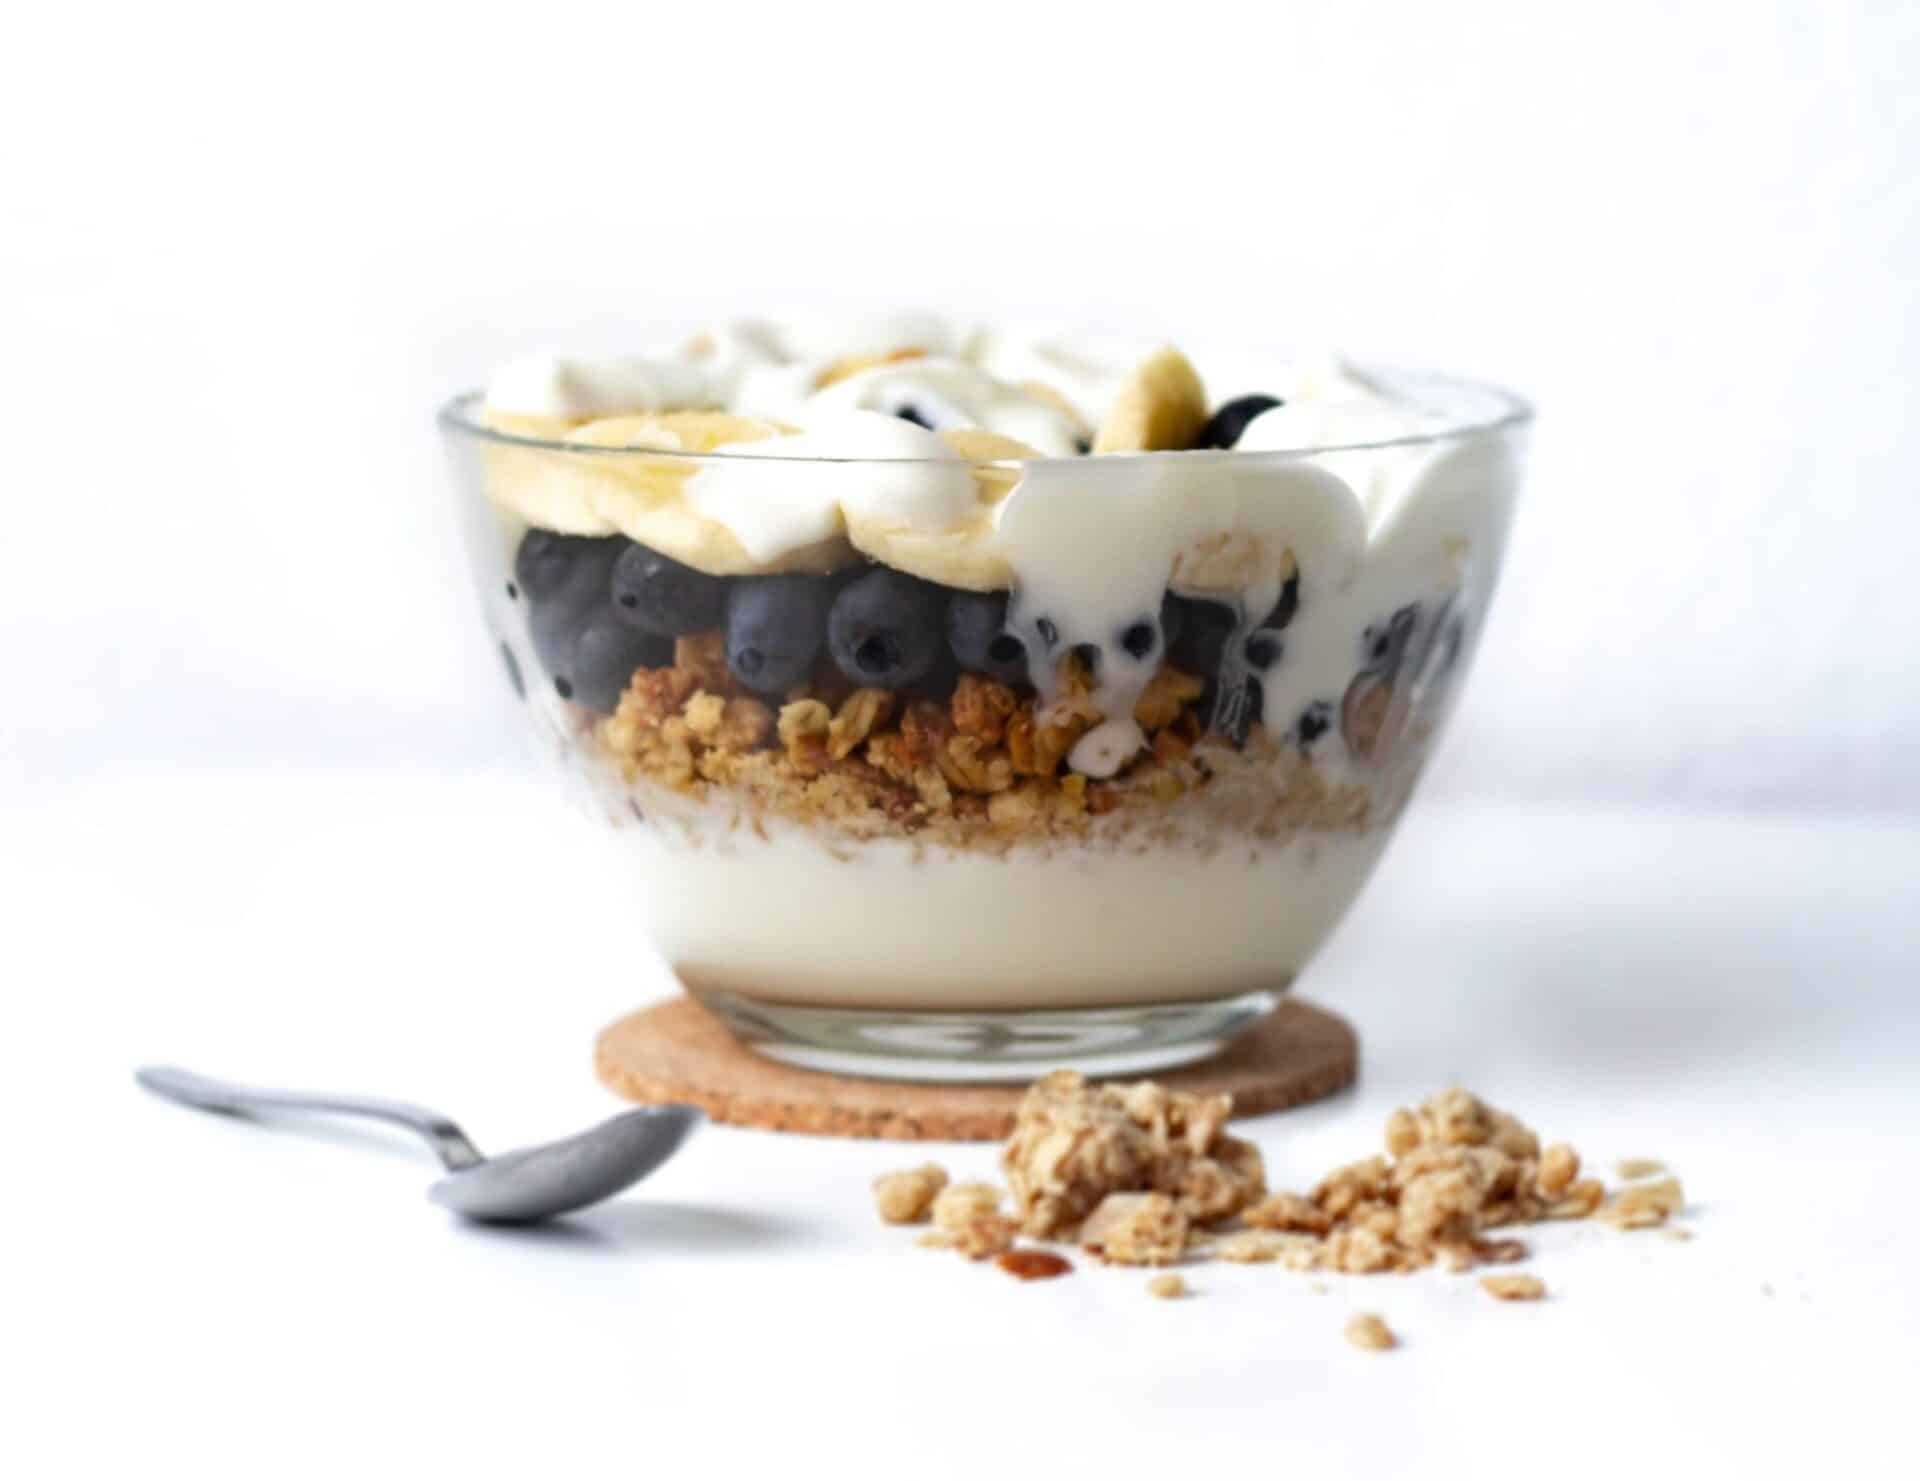 How to choose the best yogurt: a dietitian’s guide to the yogurt aisle